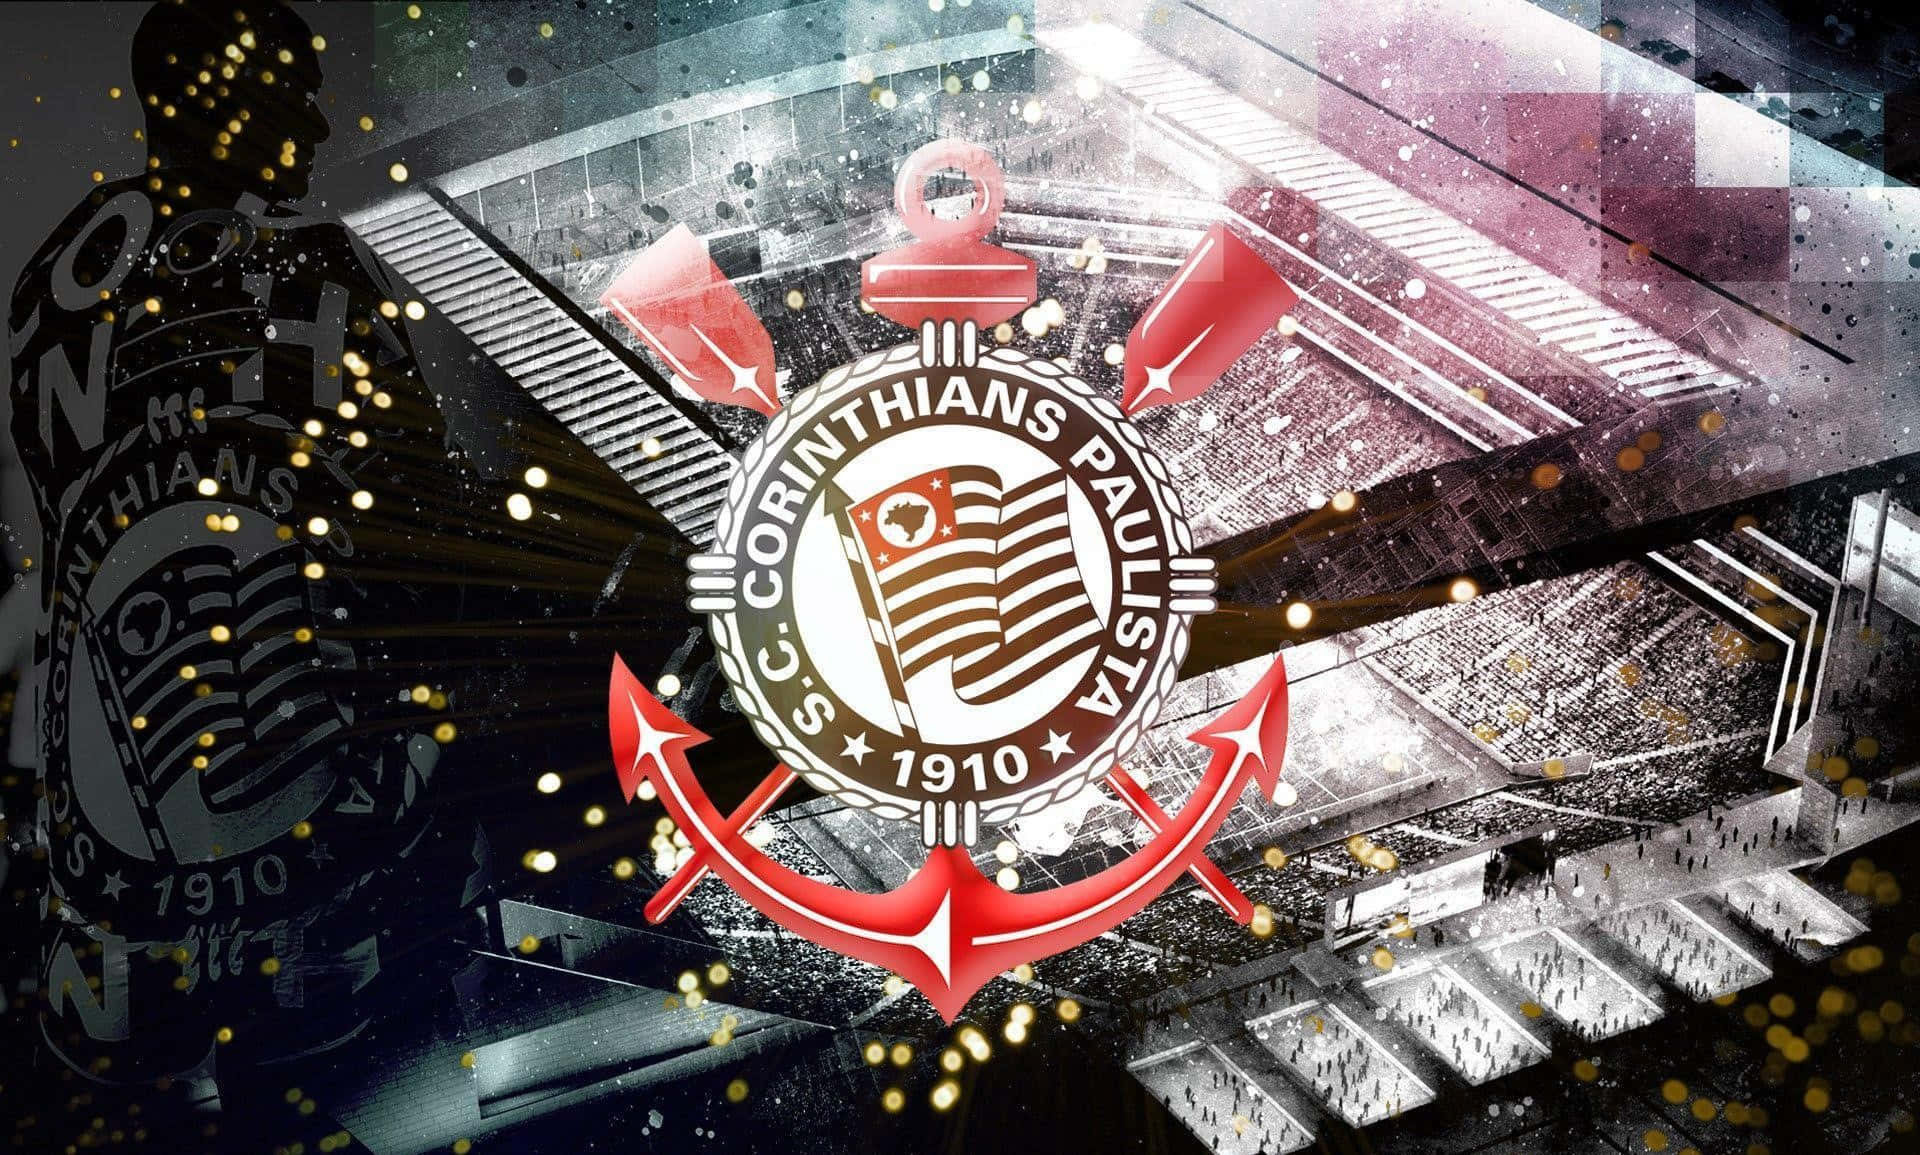 Corinthians Football Club Crestand Stadium Wallpaper